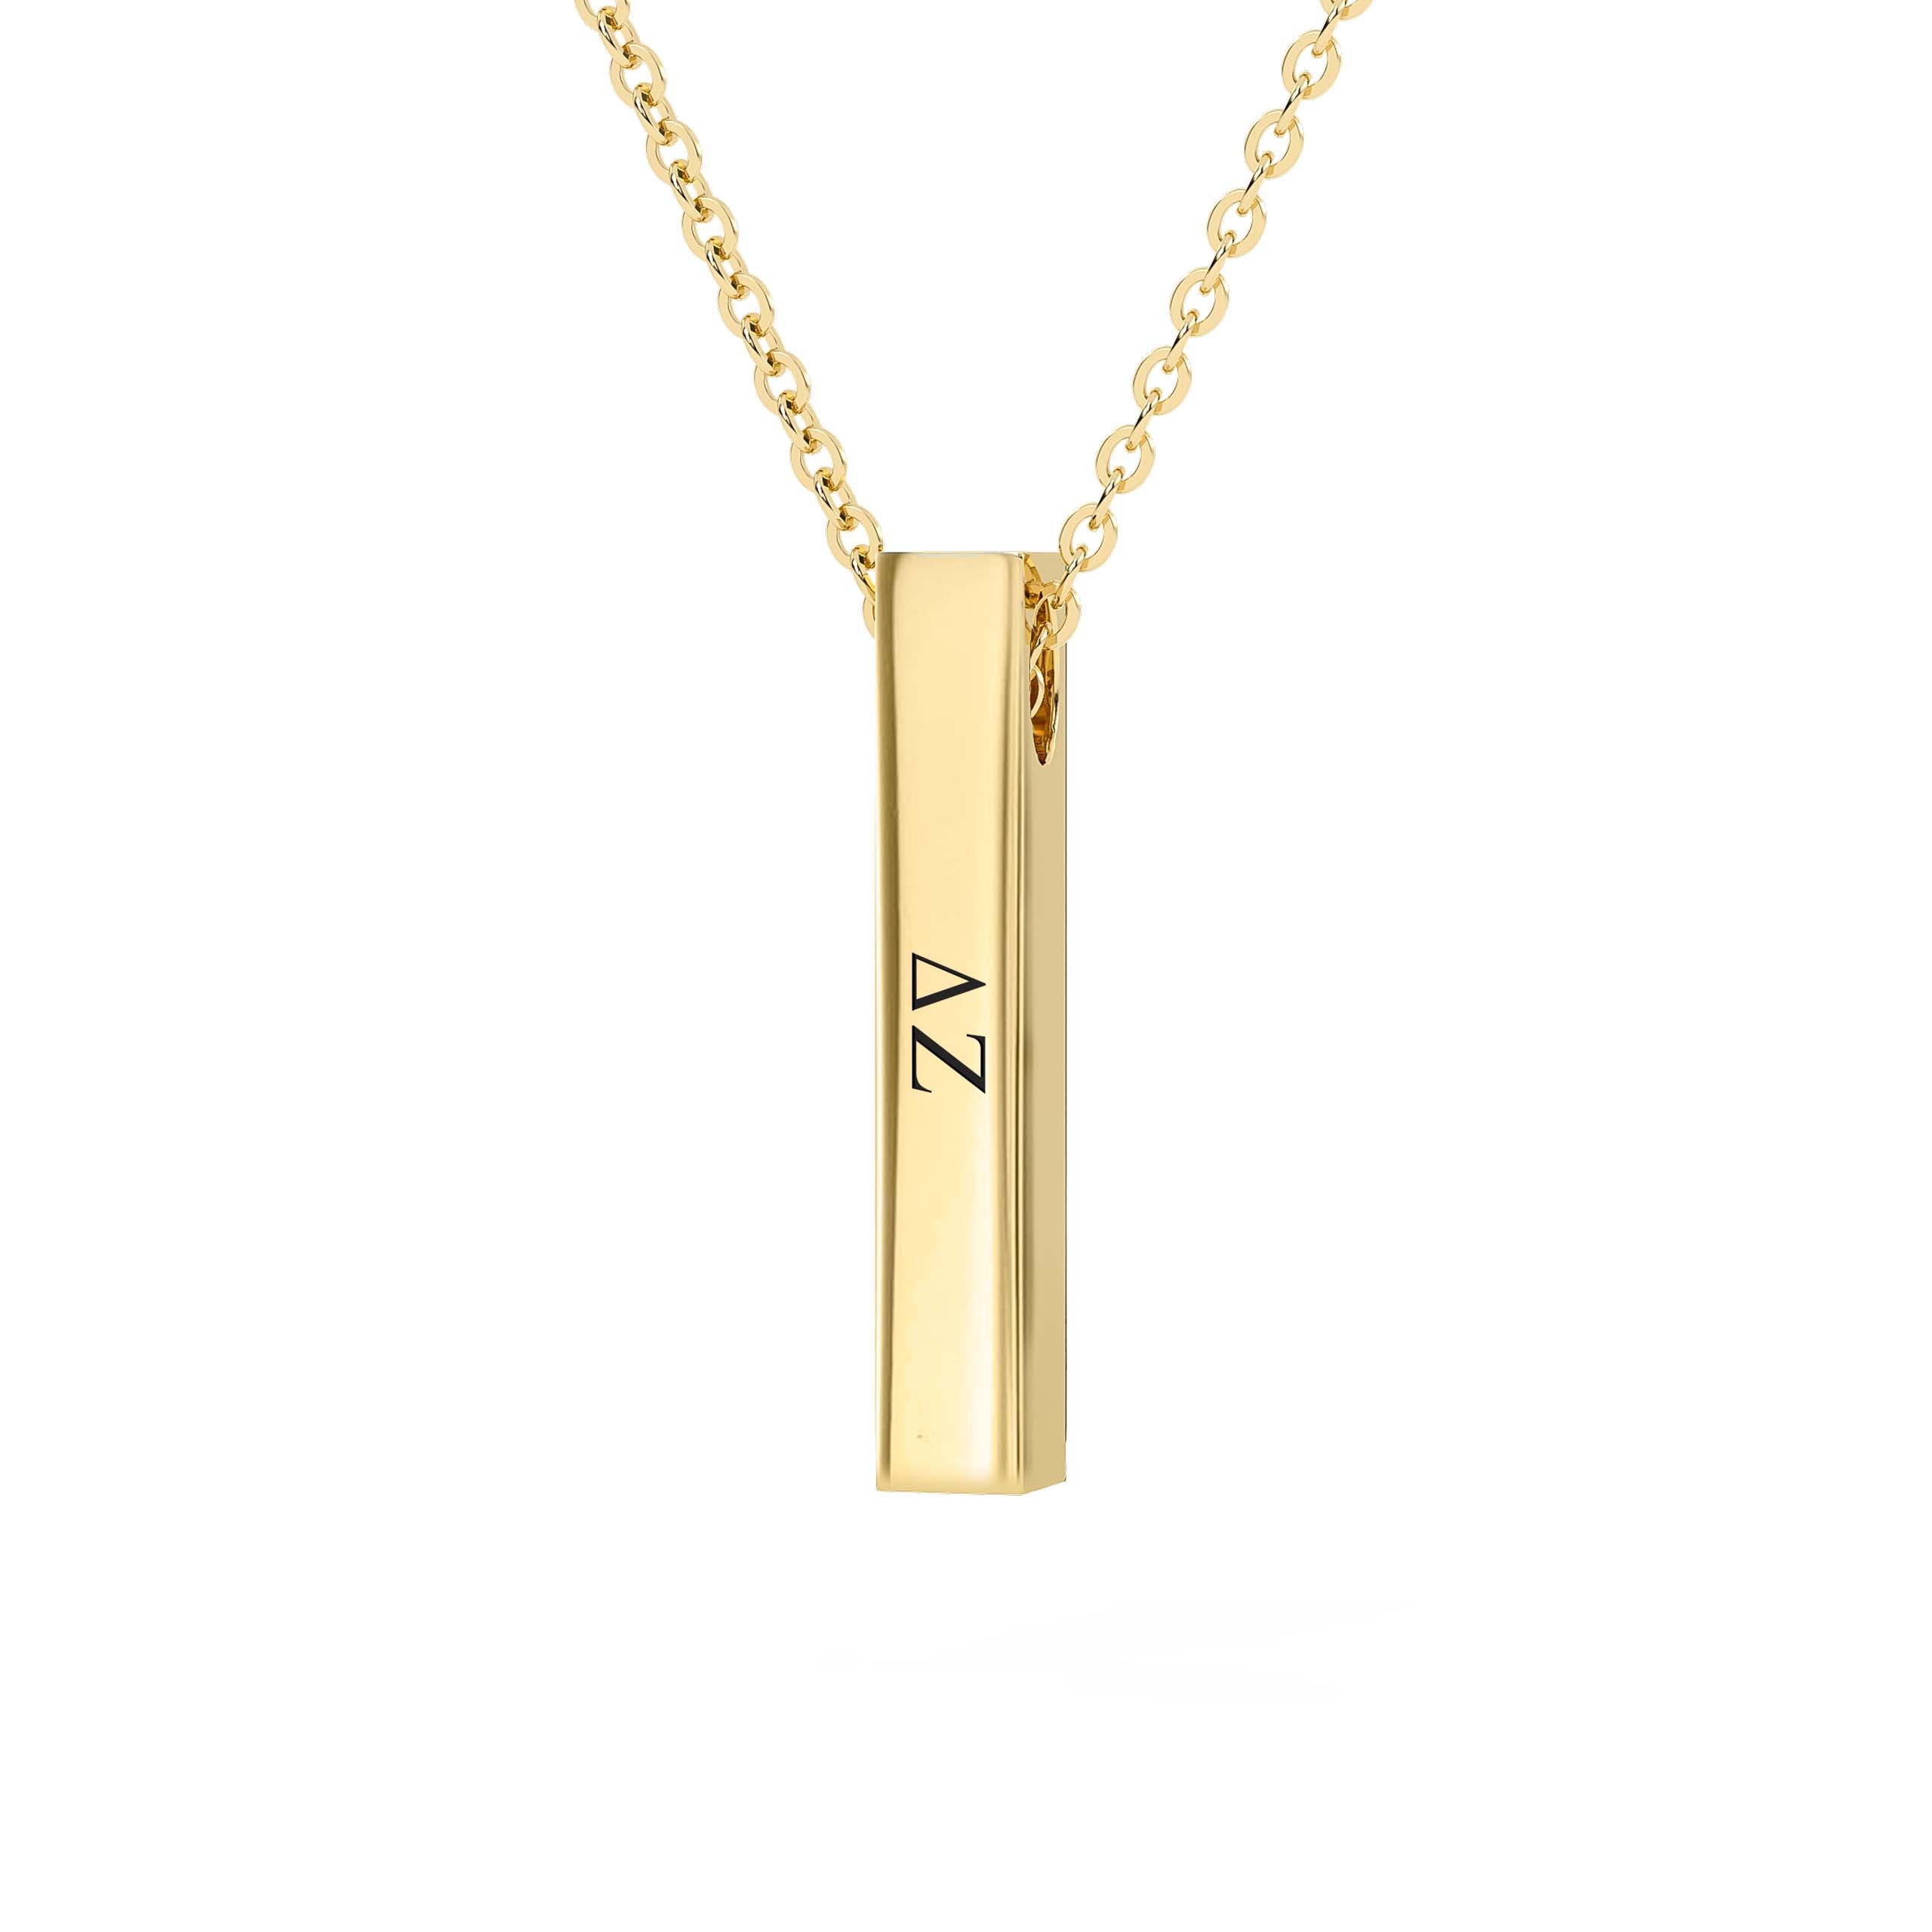 Pillar Bar Necklace - 18k Gold Vermeil | Bar necklace, Gold bar necklace,  Fashion jewelry